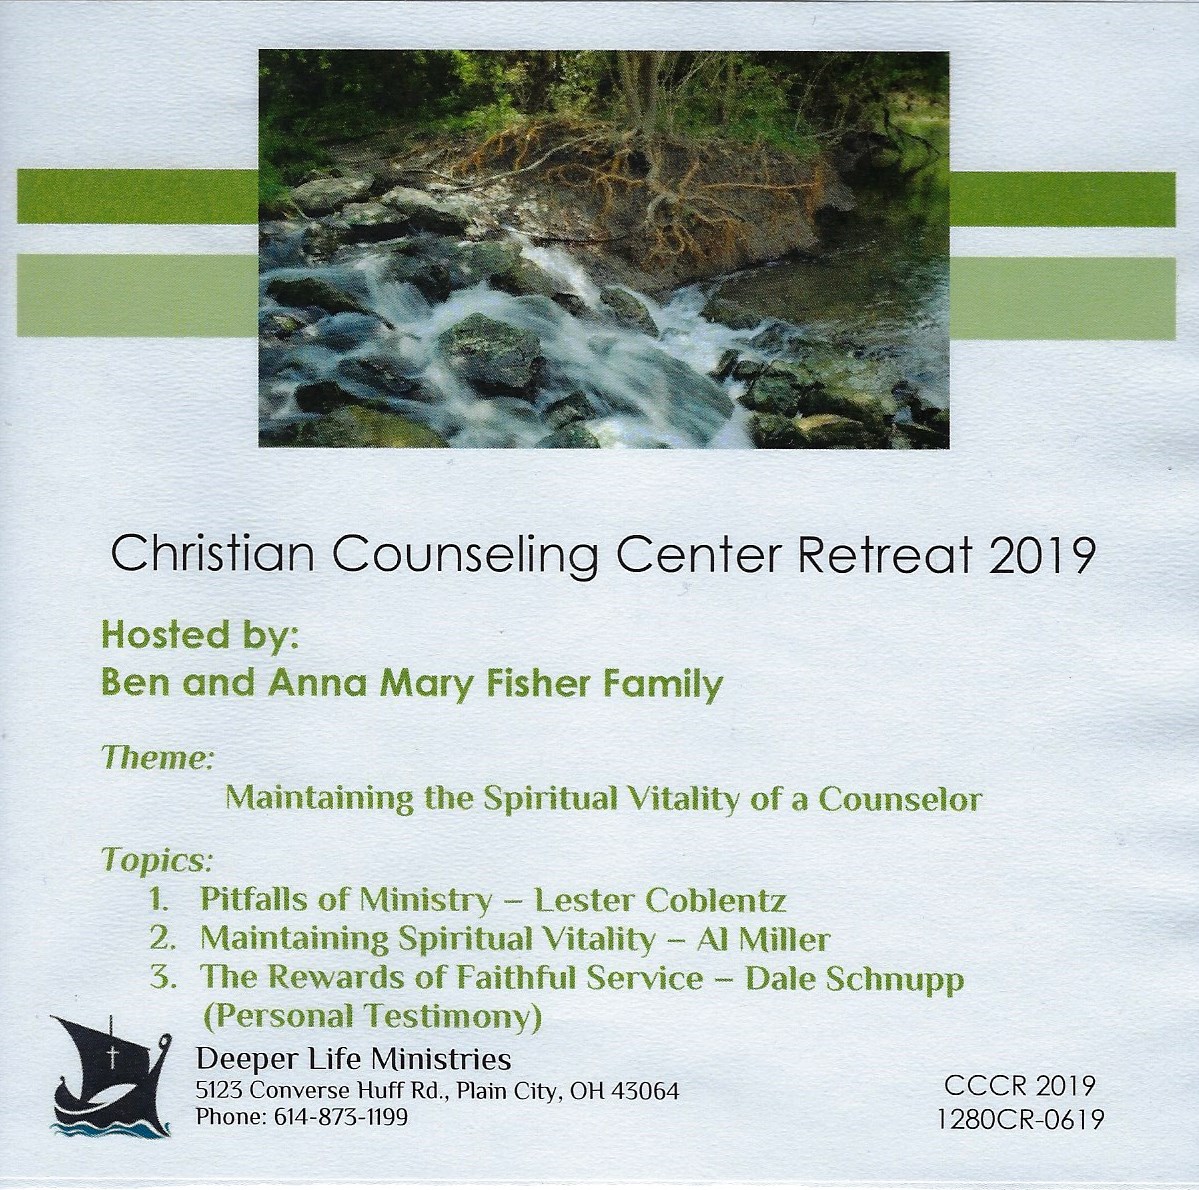 CHRISTIAN COUNSELING CENTER RETREAT 2019